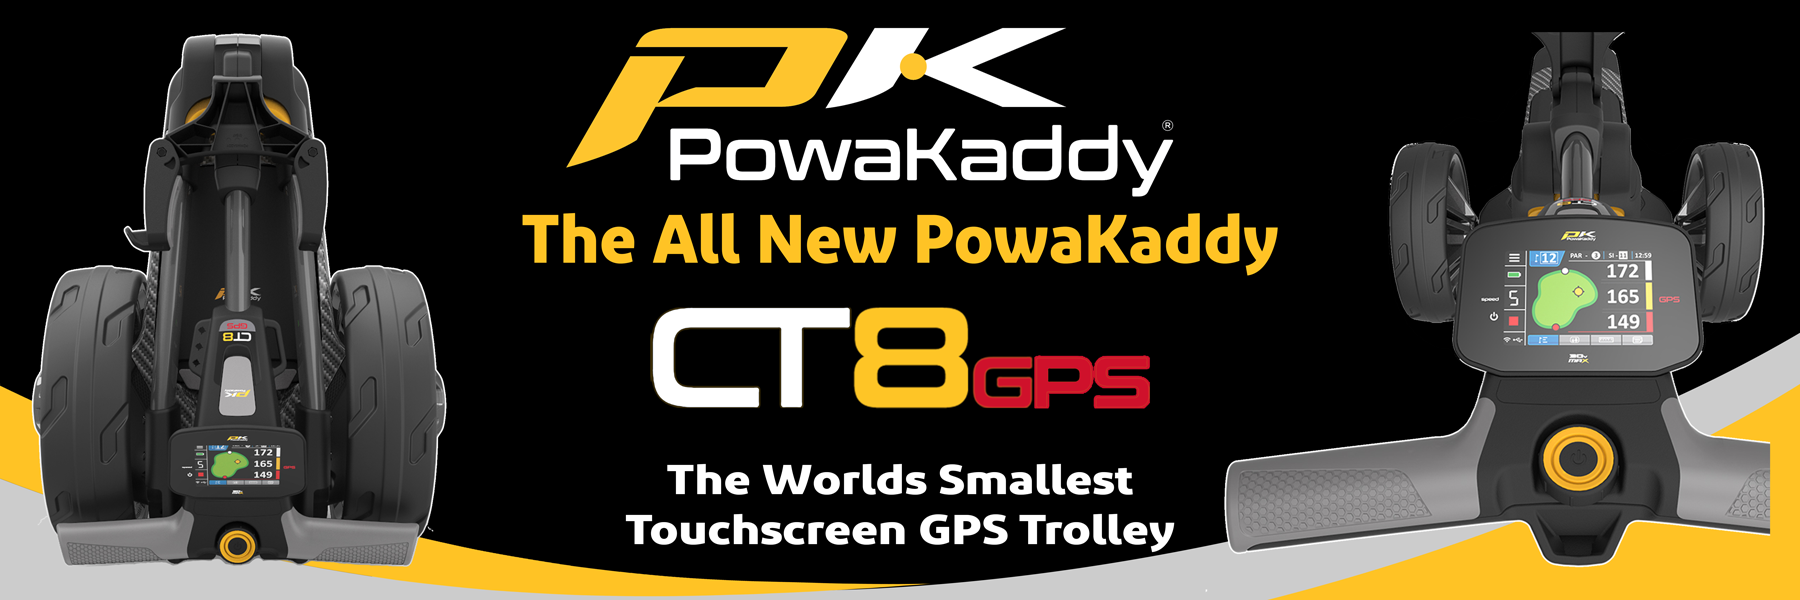 Powakaddy-CT8-GPS-Banner-1800X600